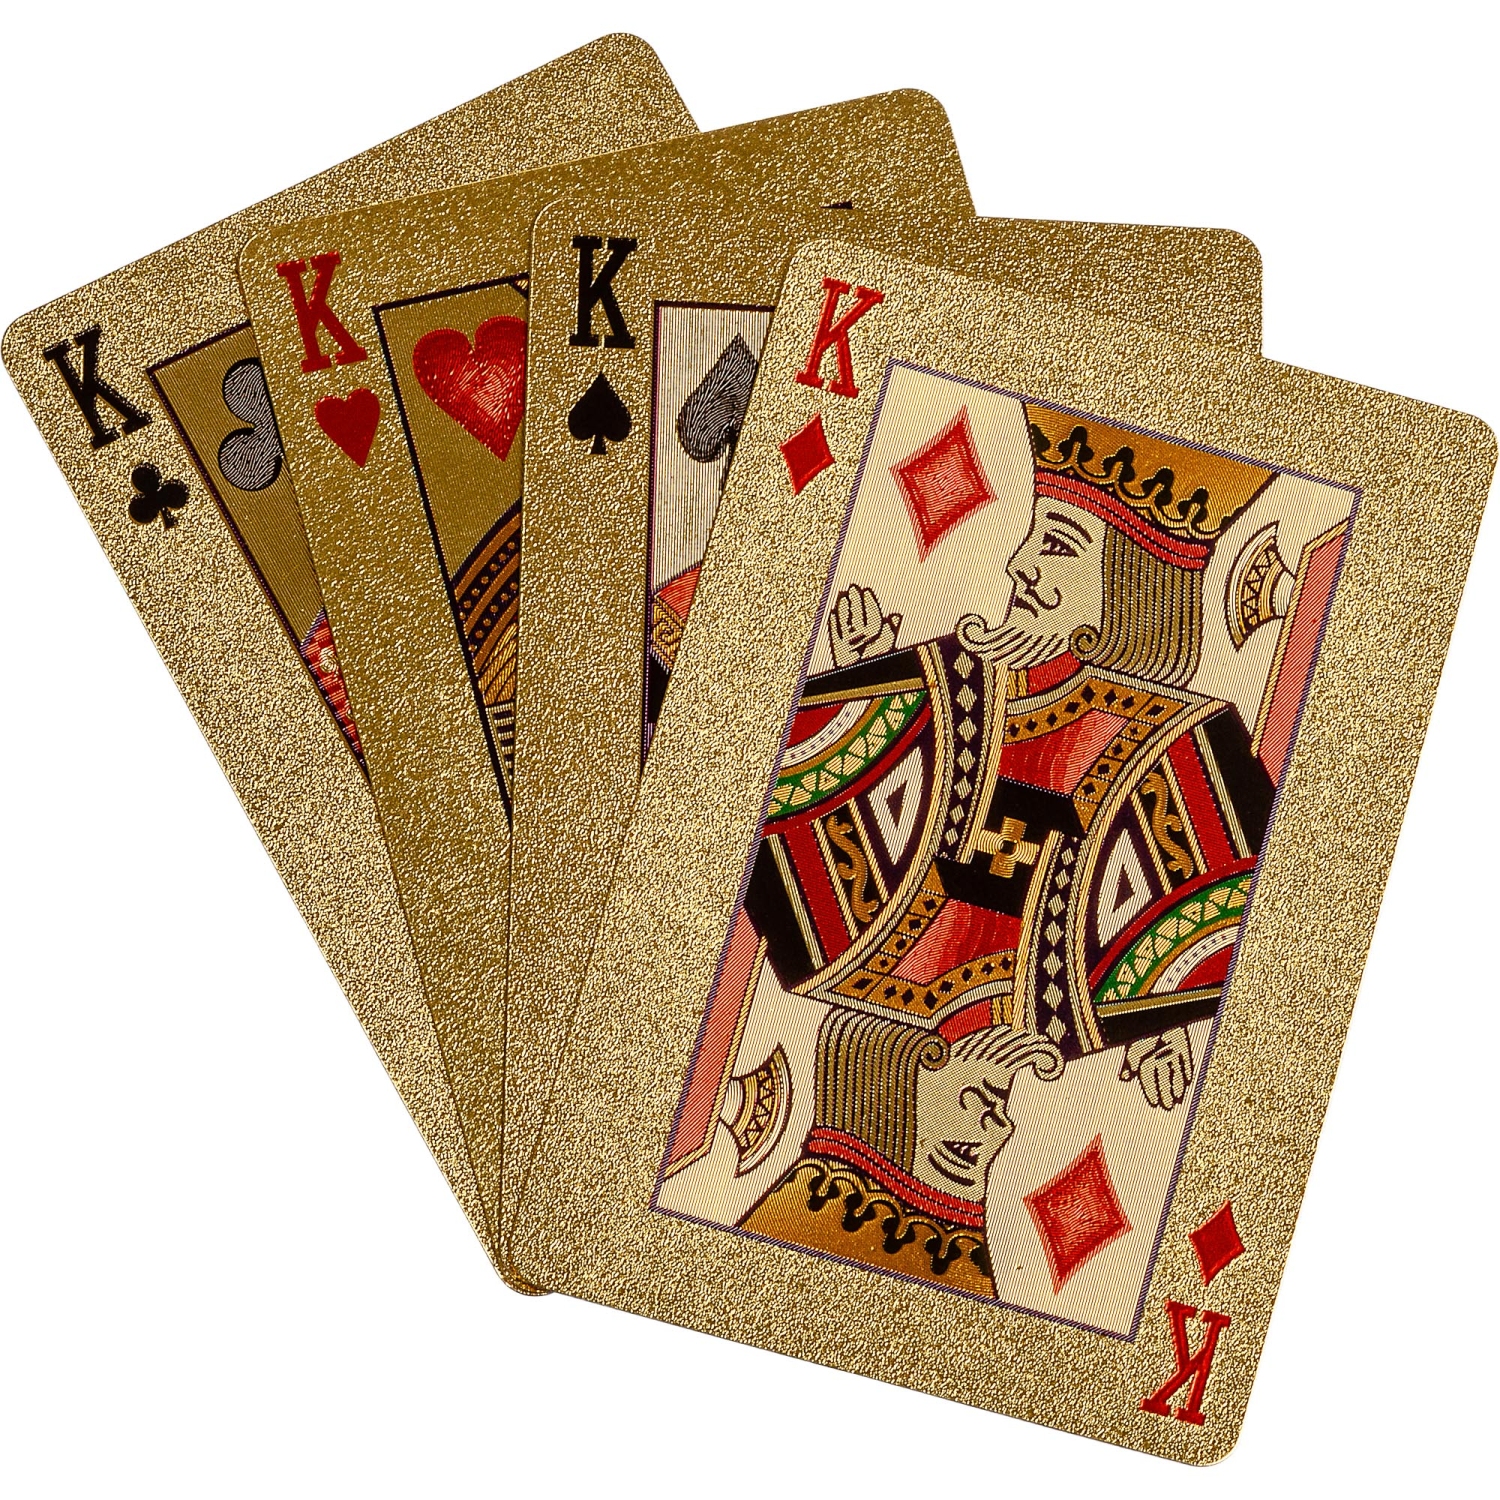 Pokerkarten Kaufen